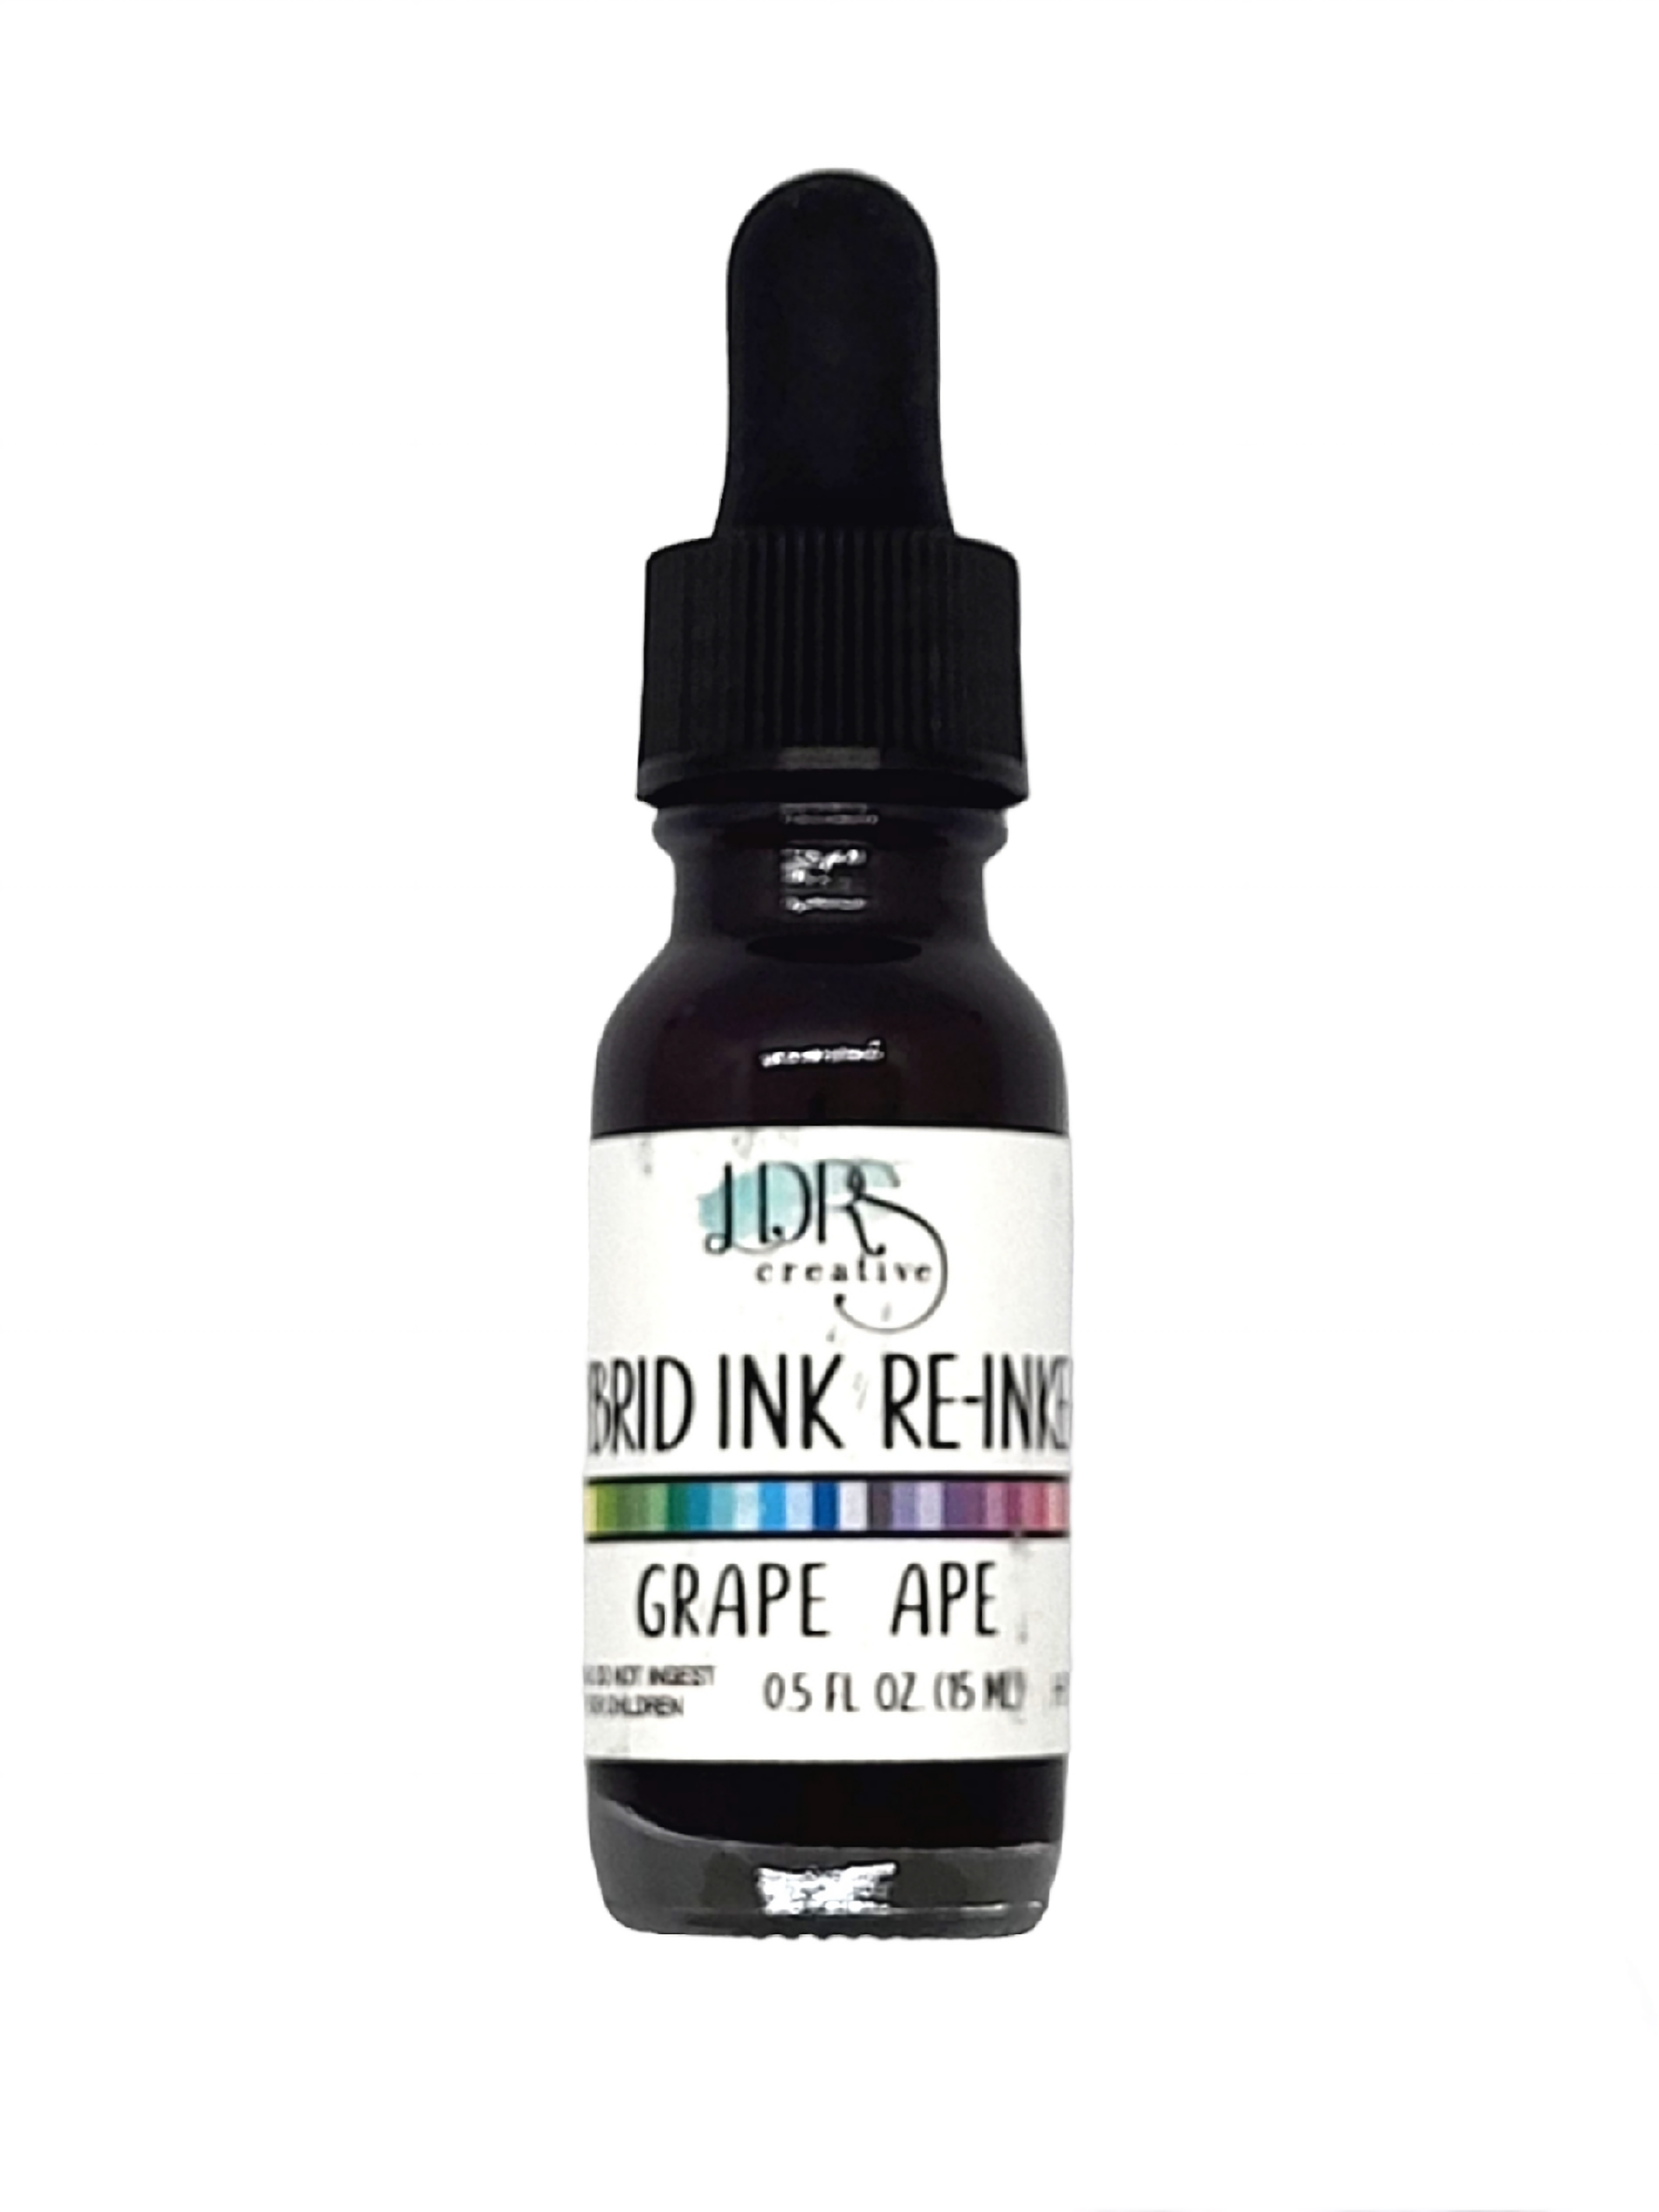 Grape Ape Hybrid Ink Re-Inker – LDRS Creative - Wholesale